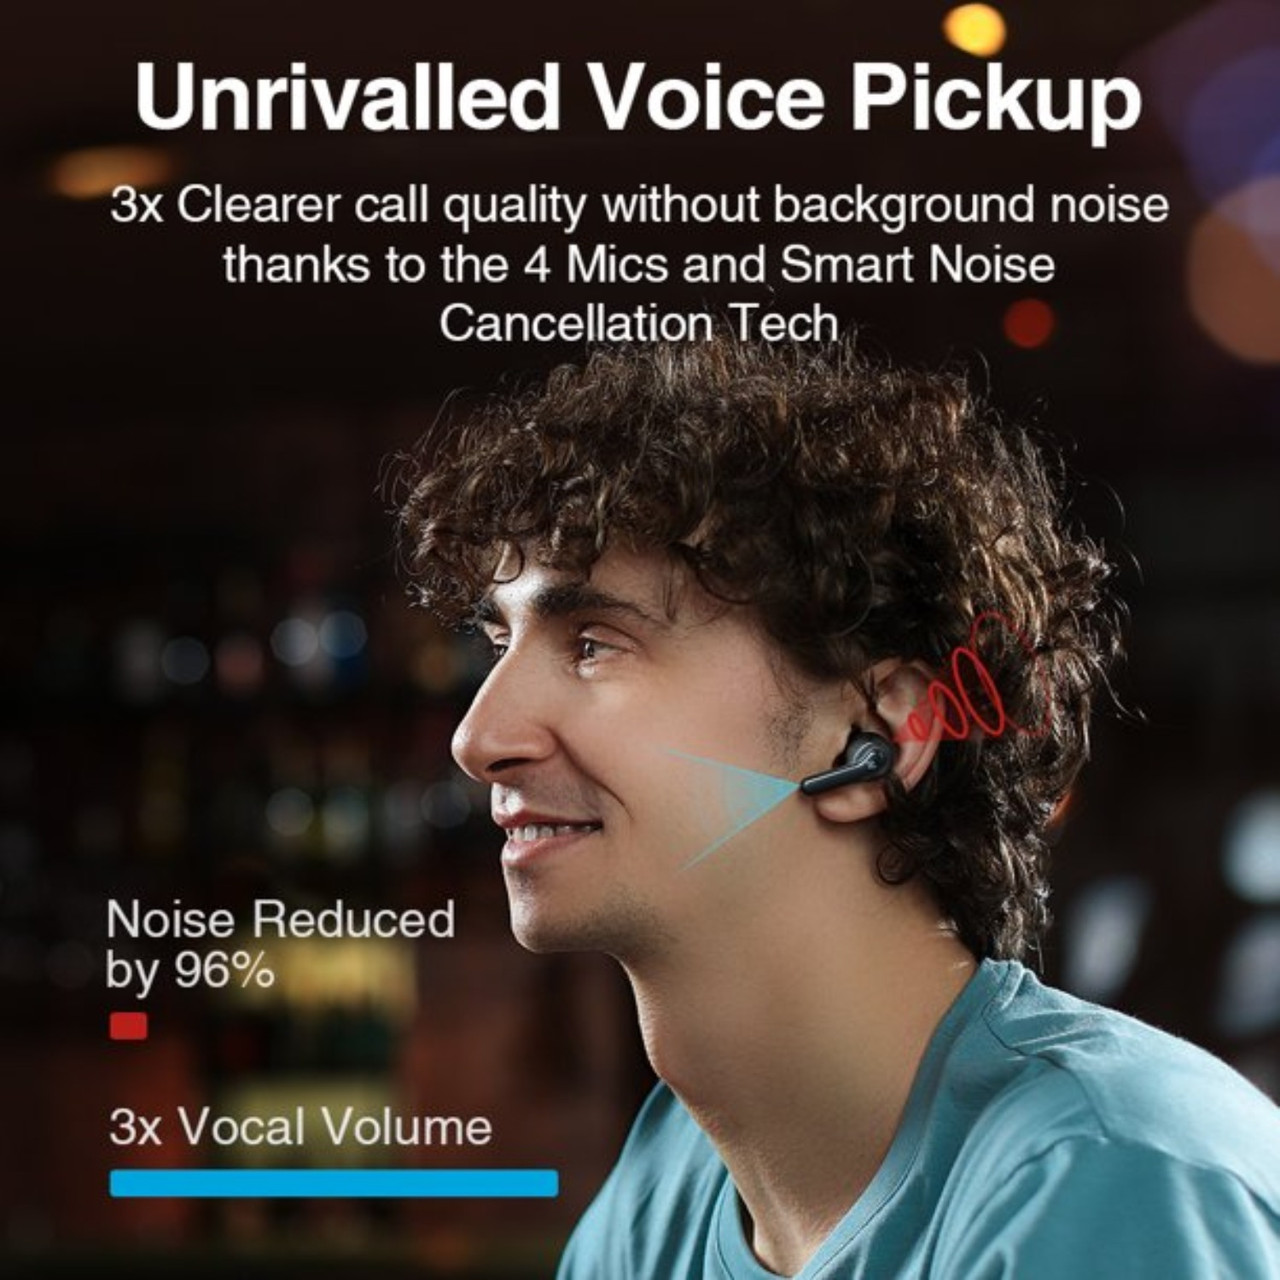 In-Ear True Wireless Bluetooth Noise-Canceling Earbuds product image